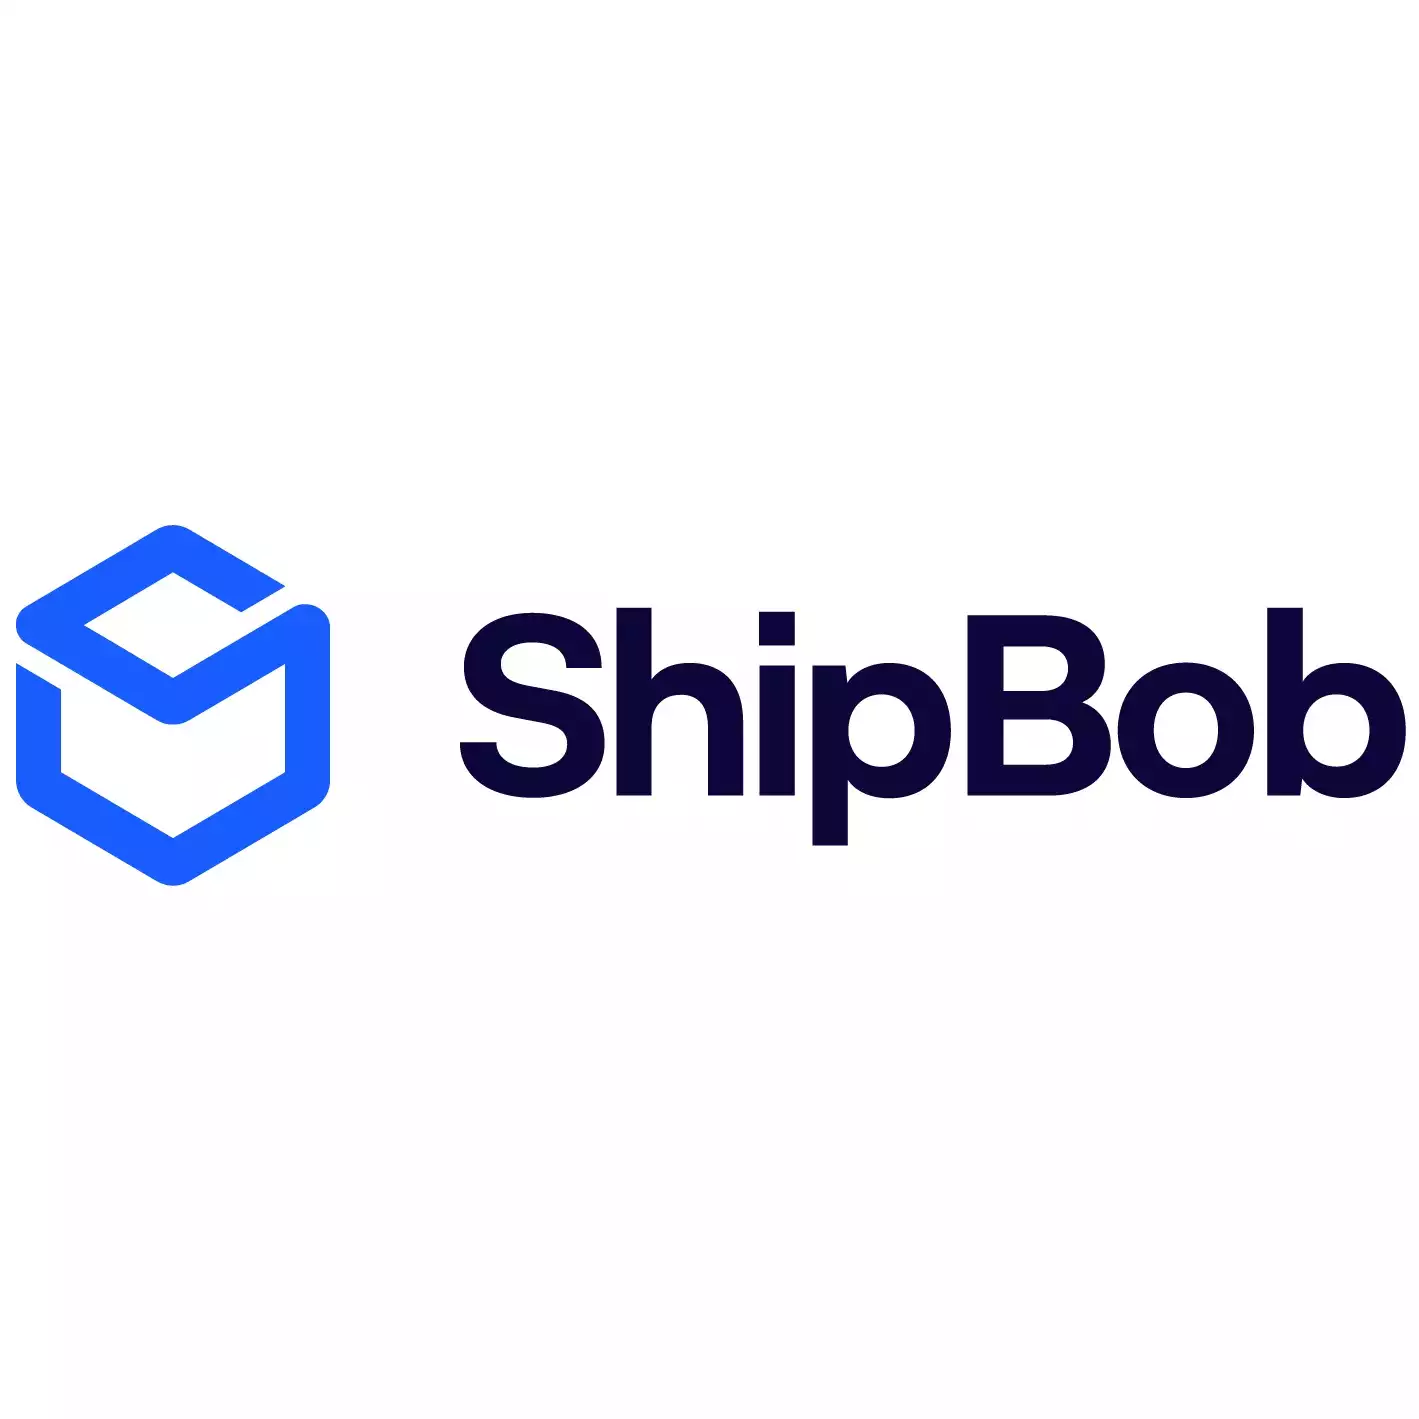 ShipBob Order Fulfillment - Kostenloses Angebot einholen